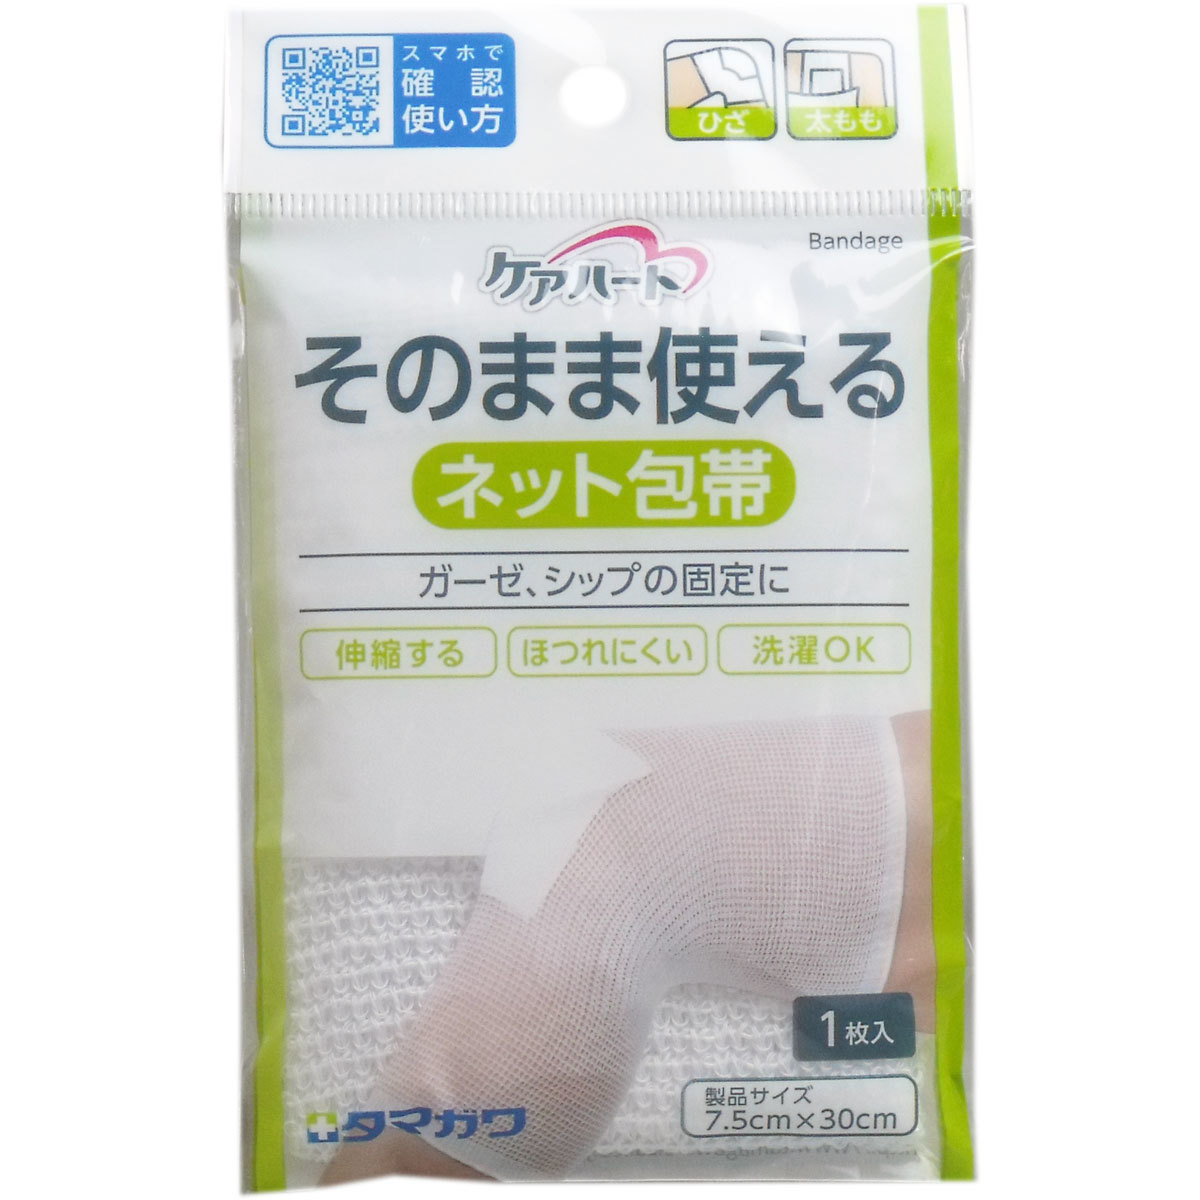  summarize profit care Heart that way possible to use net bandage knee * futoshi ..1 sheets insertion x [10 piece ] /k